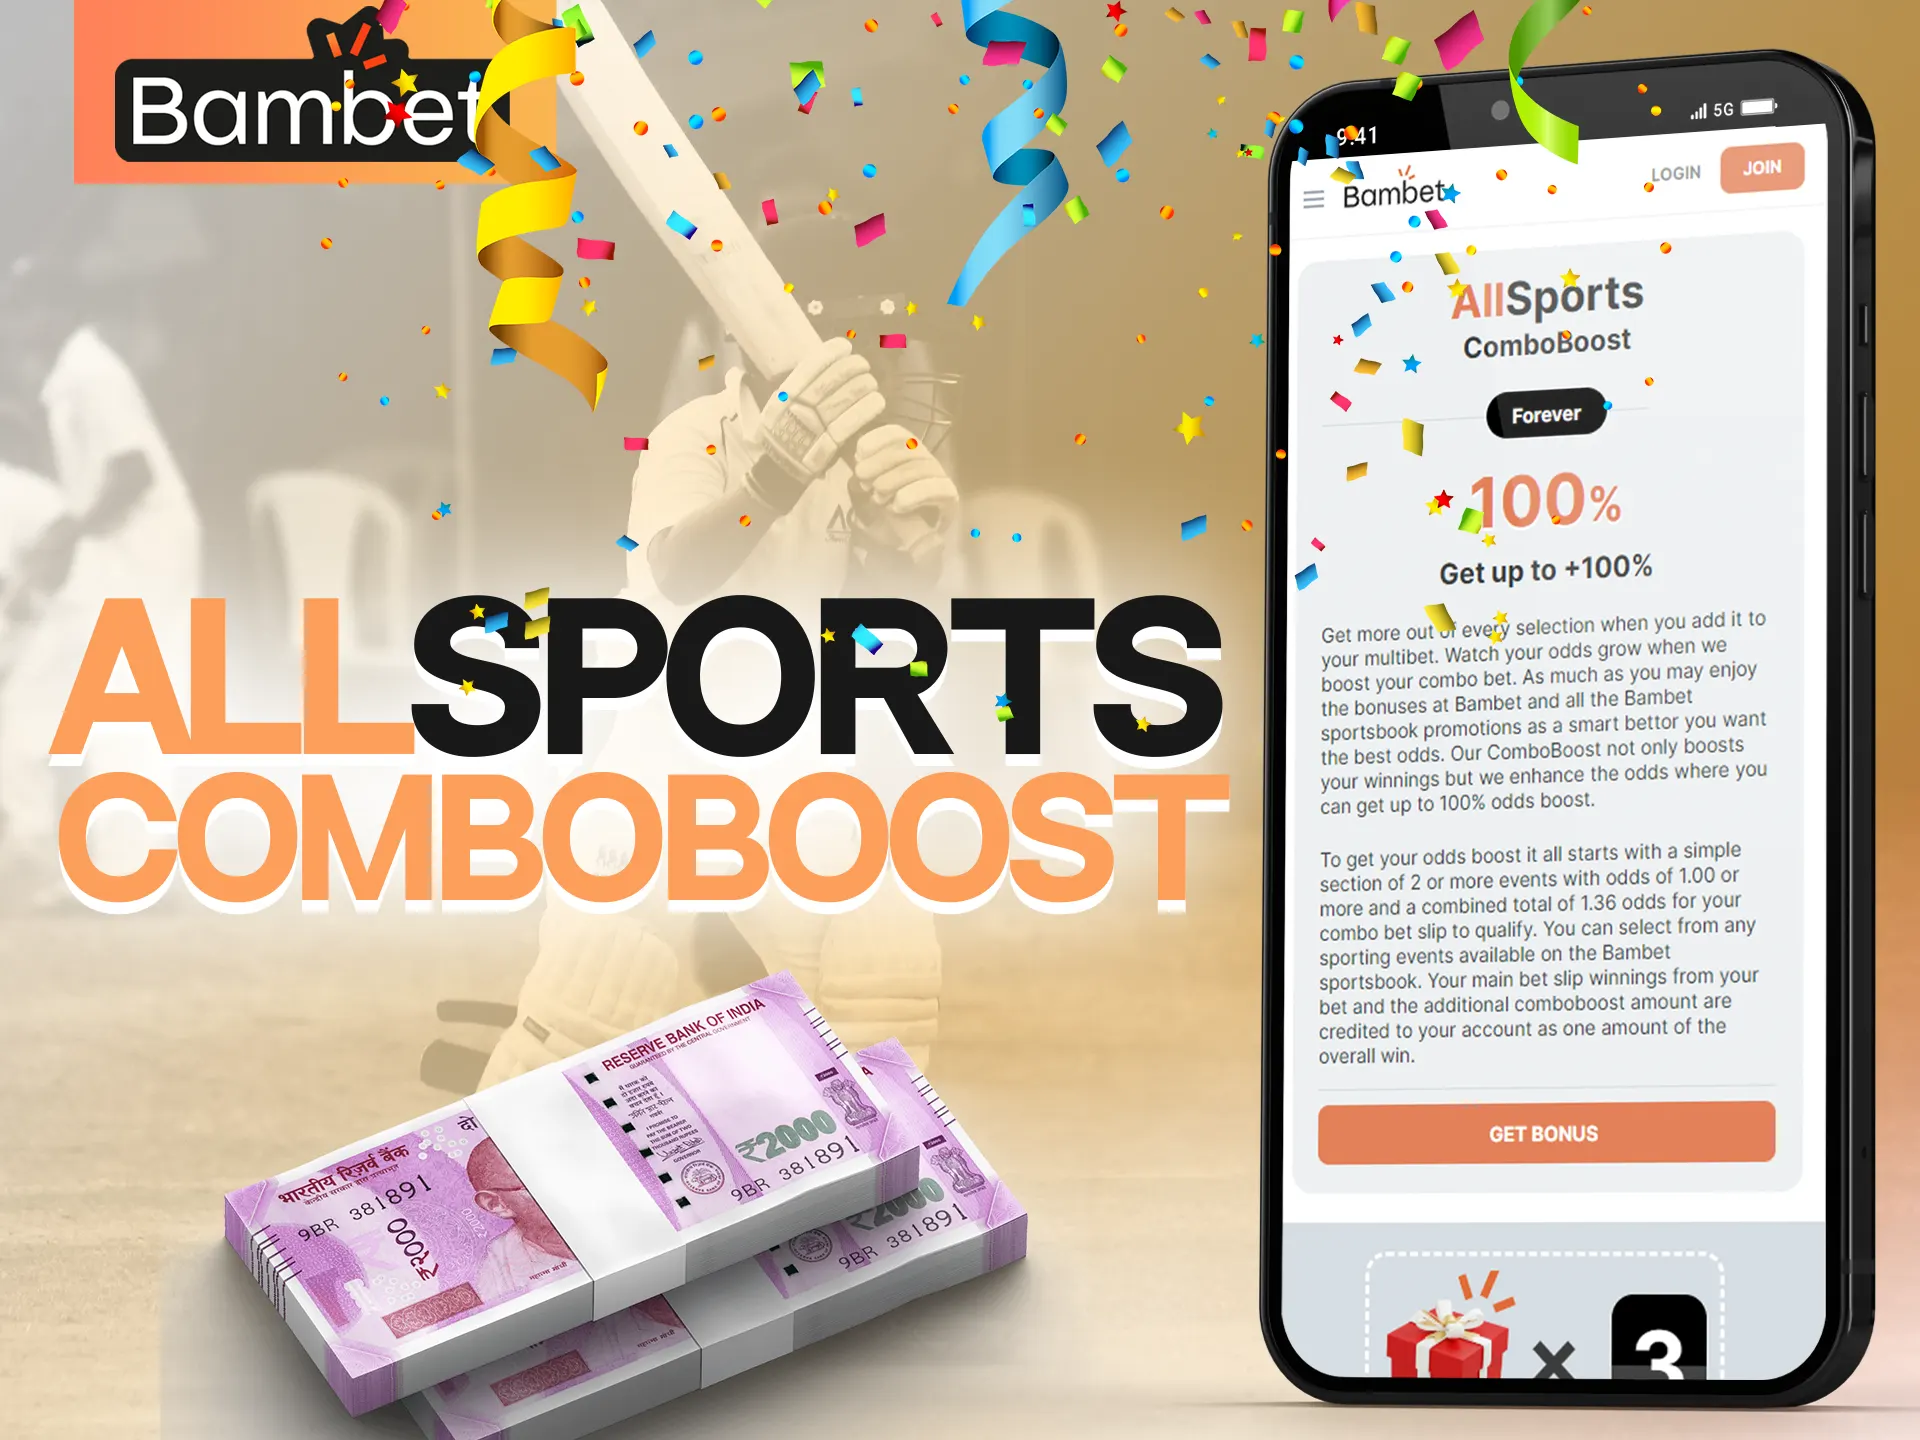 Take advantage of the Allsports bonus in Bambet app.